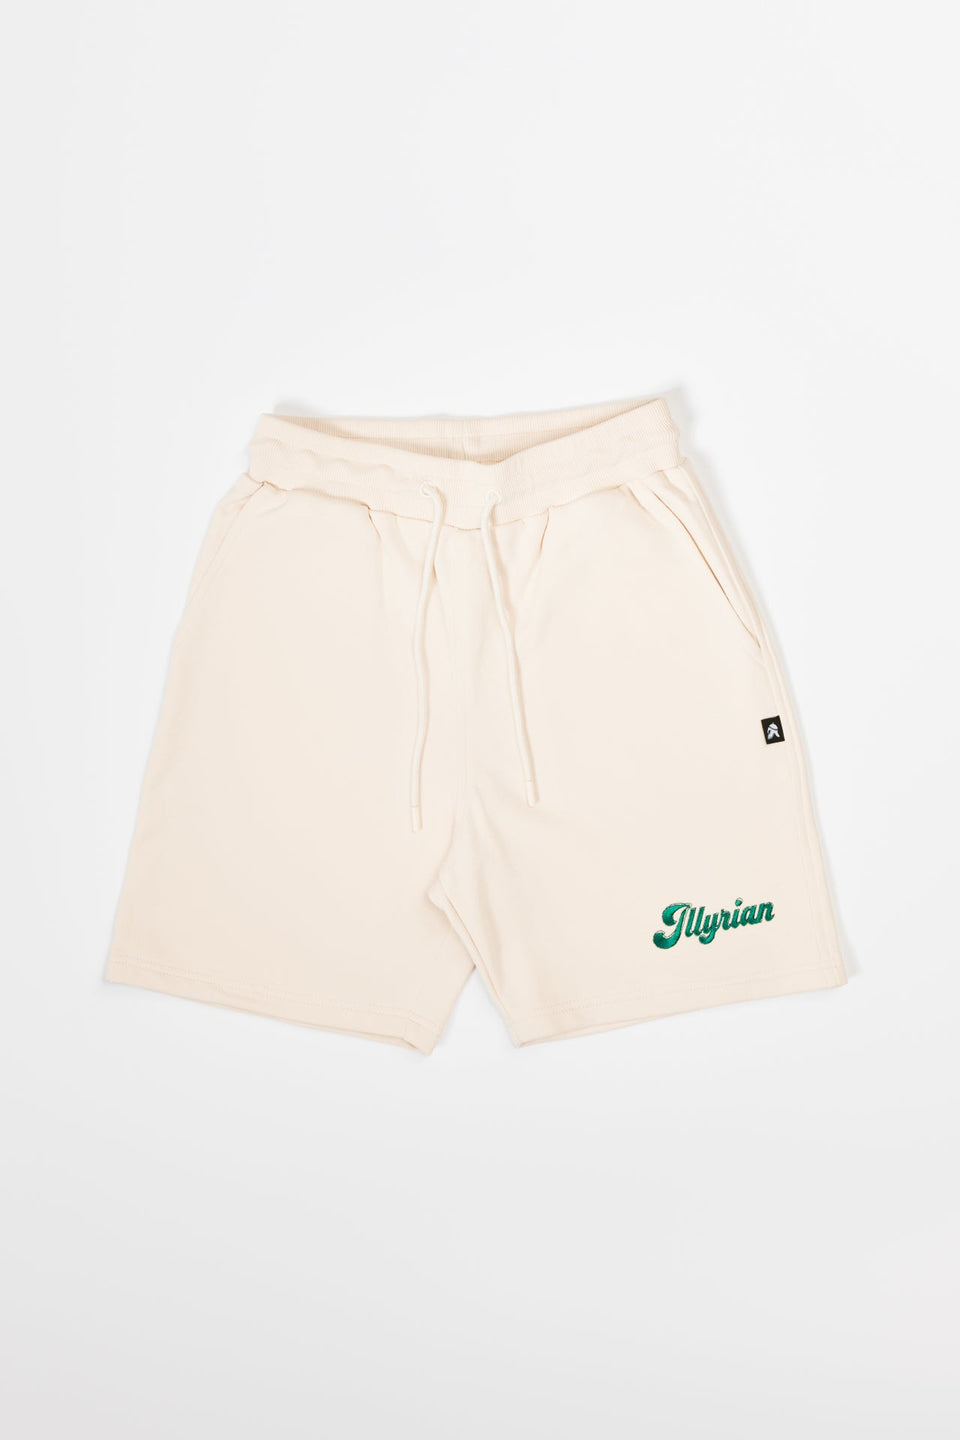 Illyrian Cotton Shorts - Ecru